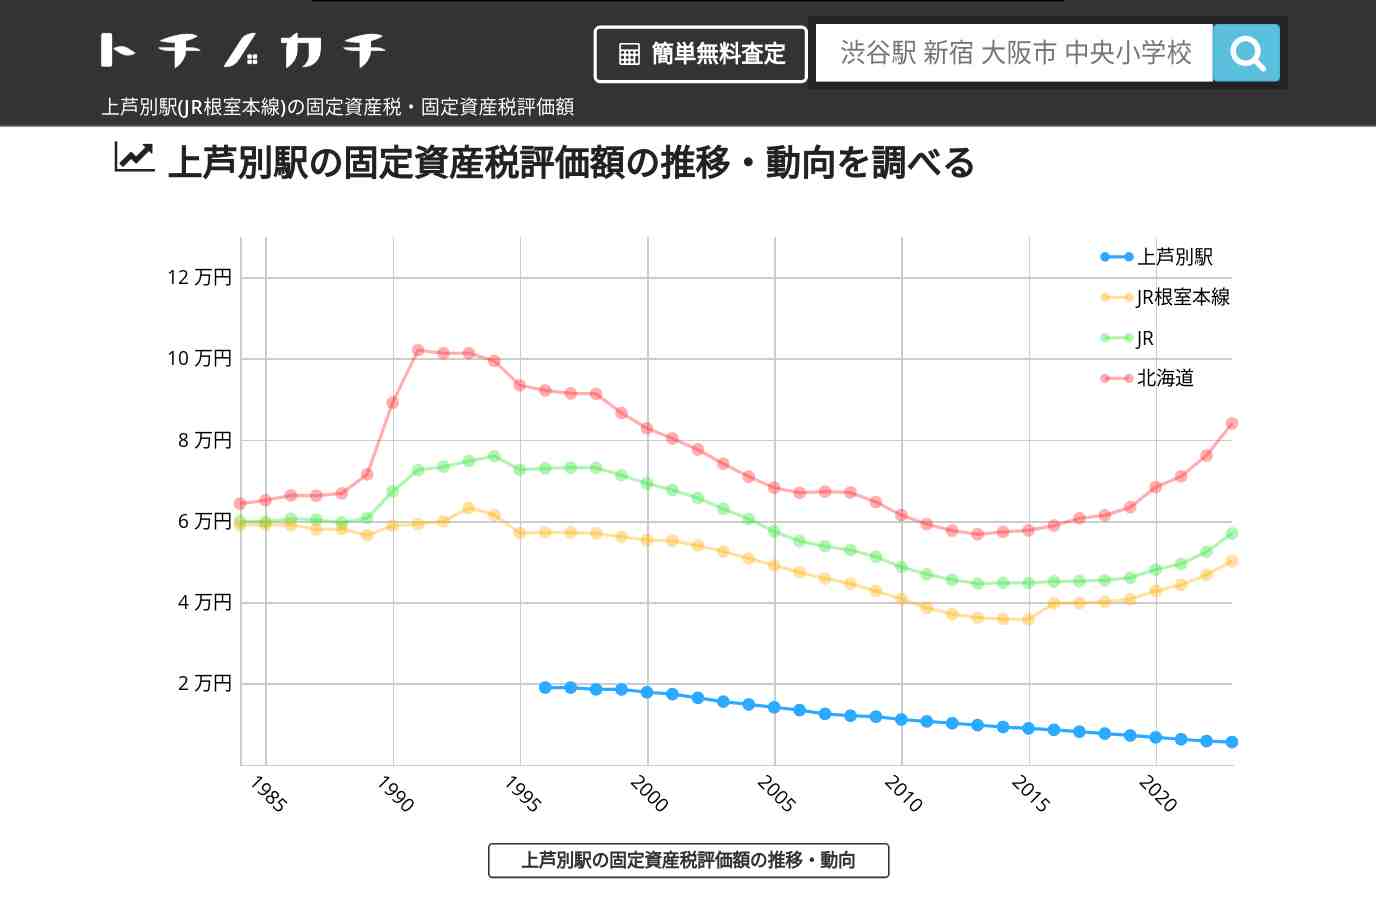 上芦別駅(JR根室本線)の固定資産税・固定資産税評価額 | トチノカチ